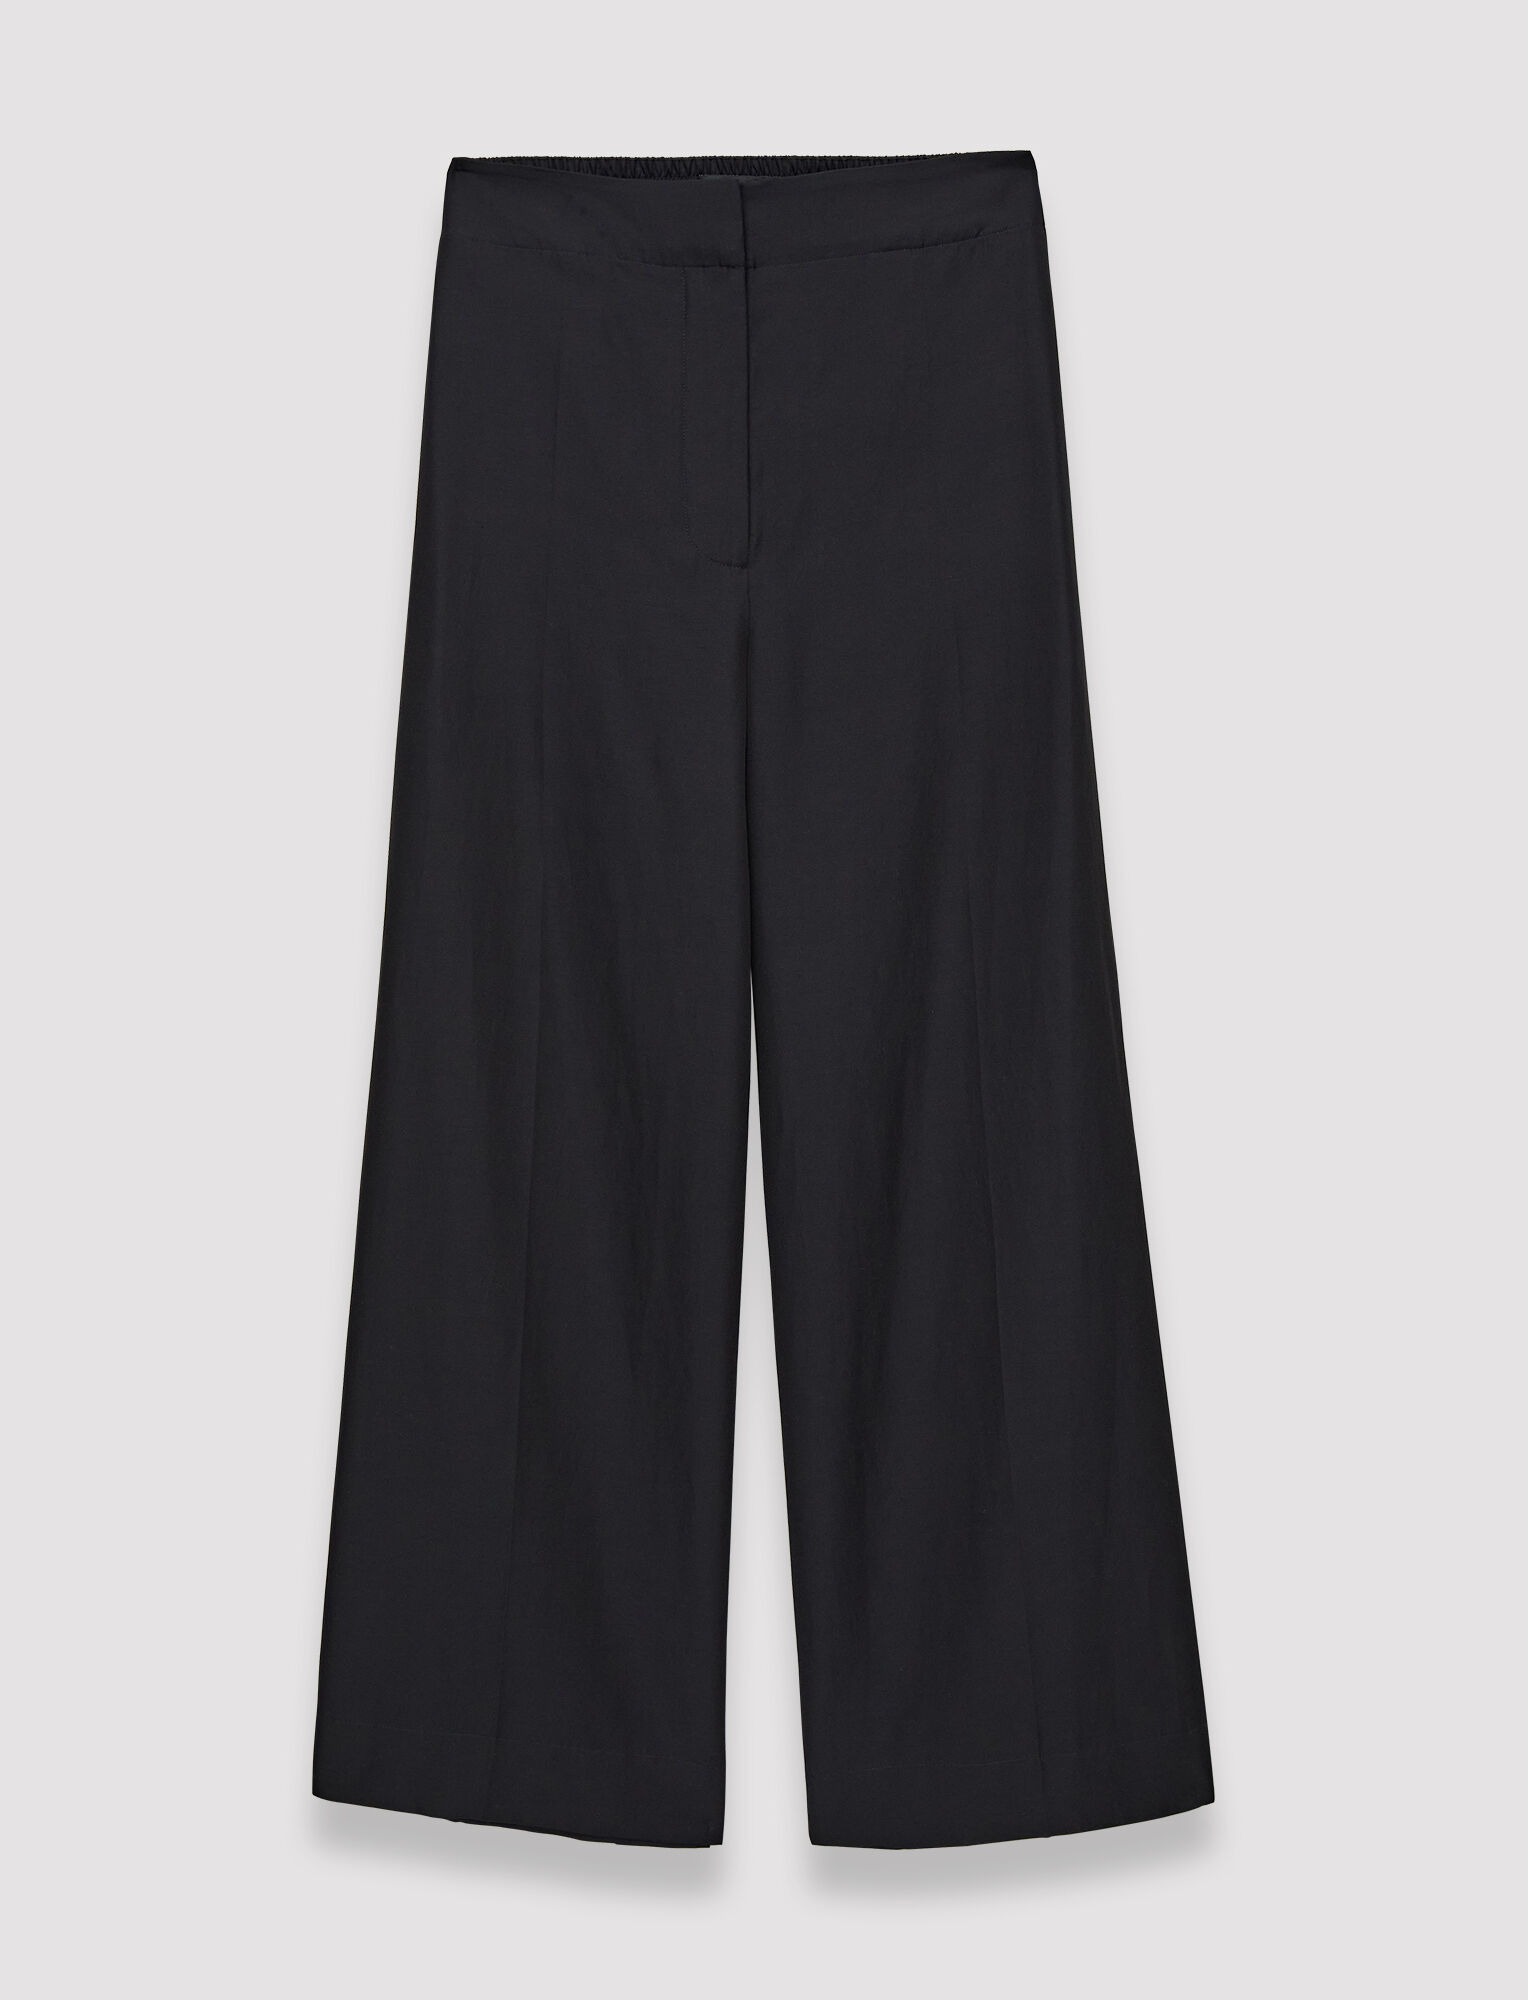 Joseph, Soft Cotton Silk Thurlow Trousers, in Black